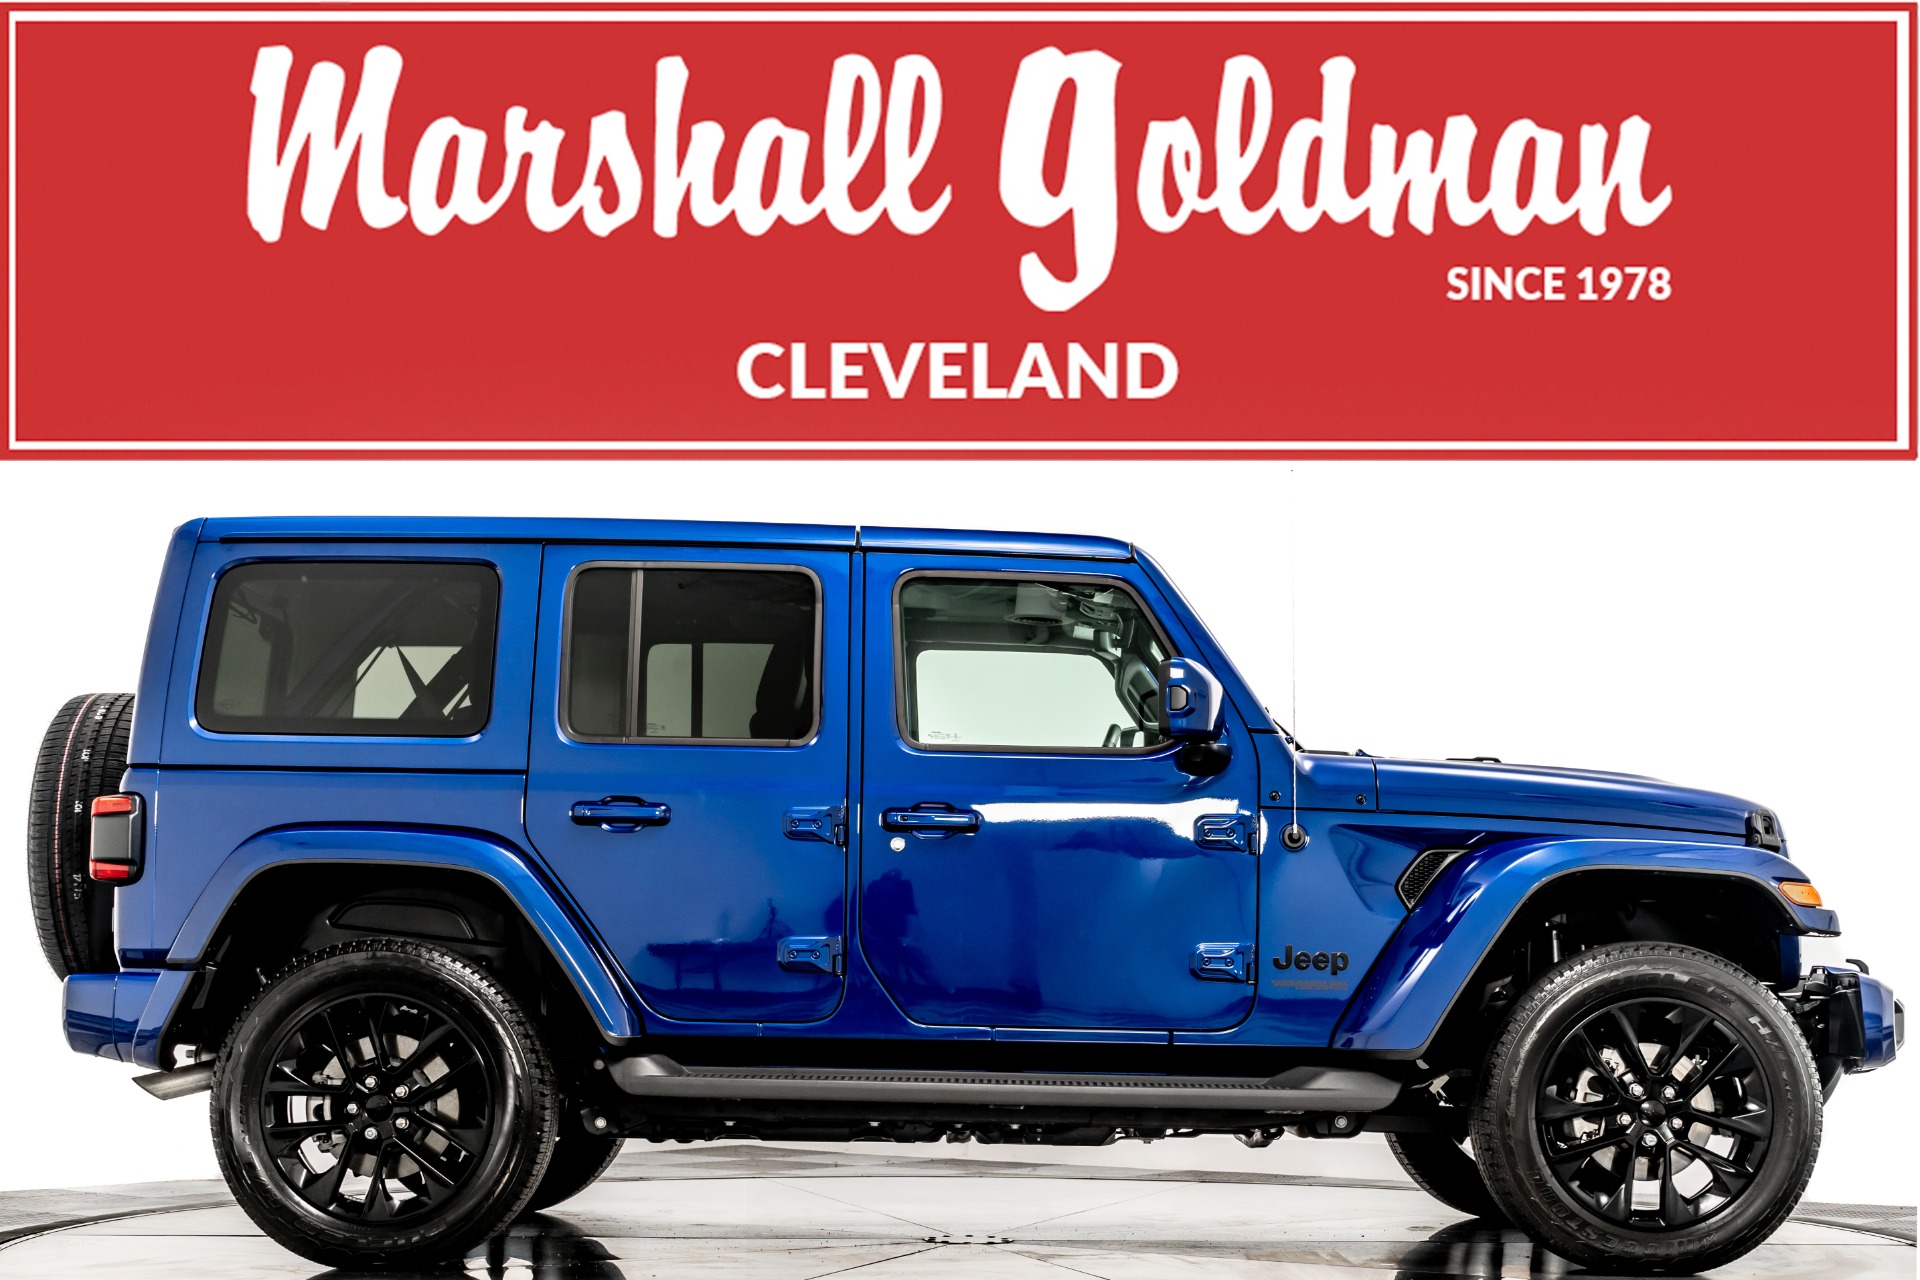 Used Jeep Wrangler Unlimited Sahara For Sale Sold Marshall Goldman Cleveland Stock Wjksbl